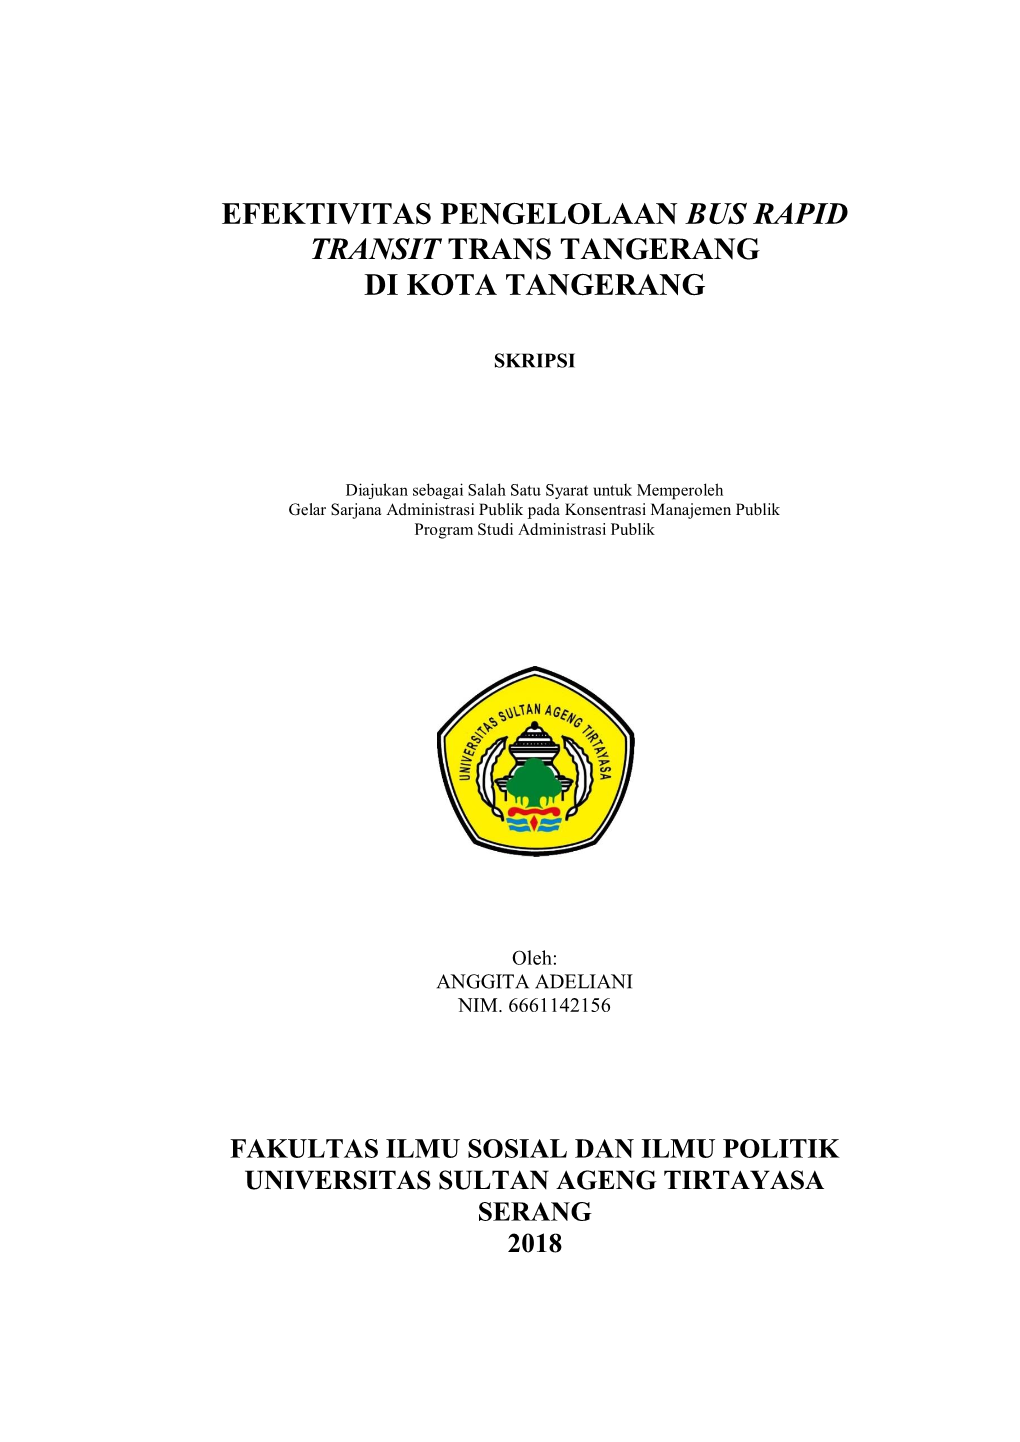 Efektivitas Pengelolaan Bus Rapid Transit Trans Tangerang Di Kota Tangerang